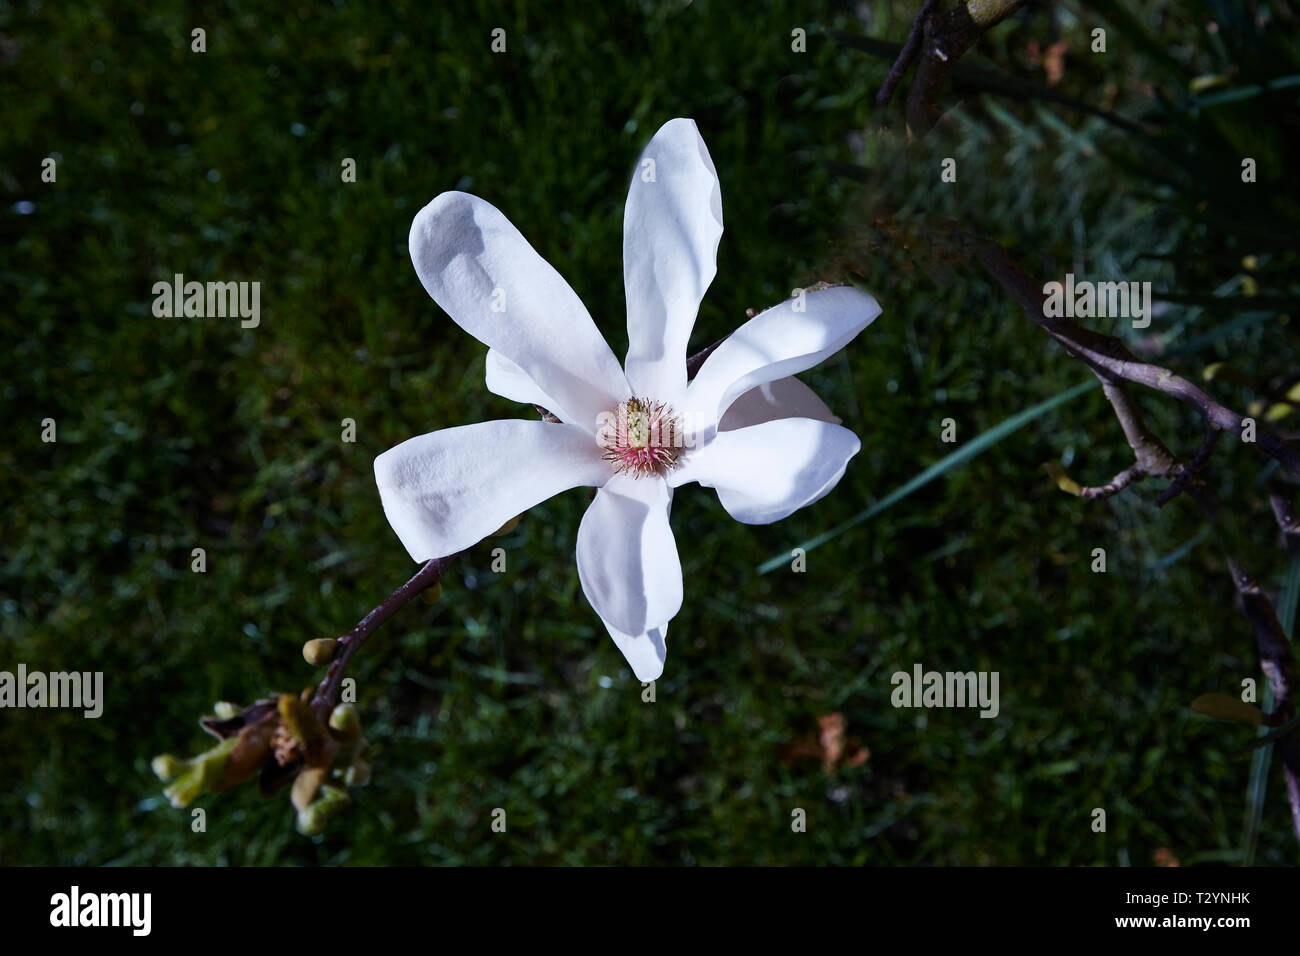 A White Camelia flower set against a hedge. Stock Photo